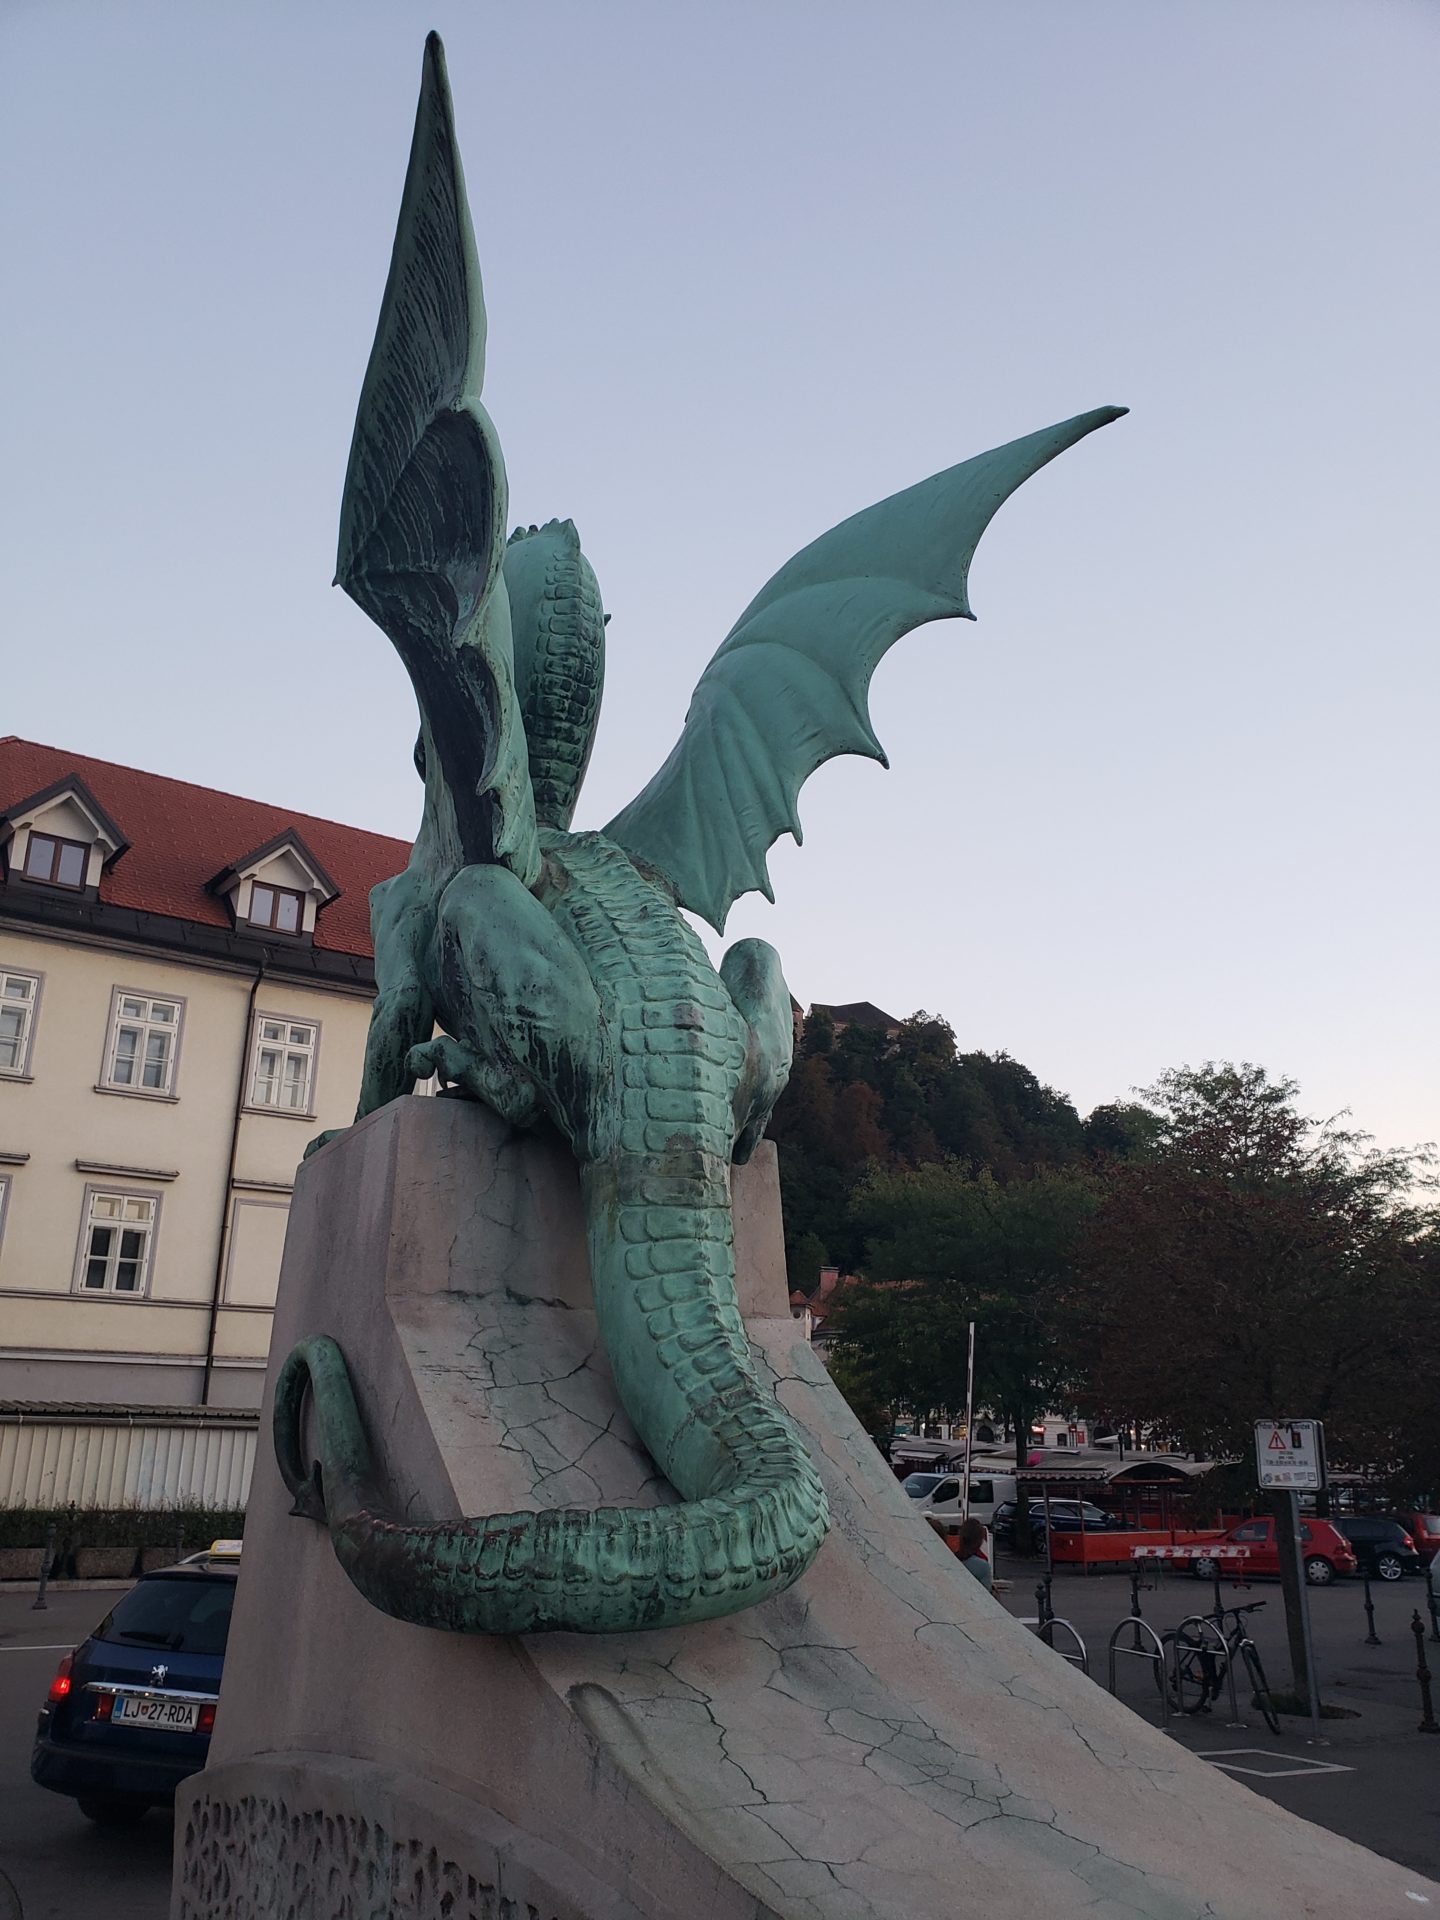 a statue of a dragon on a concrete ledge